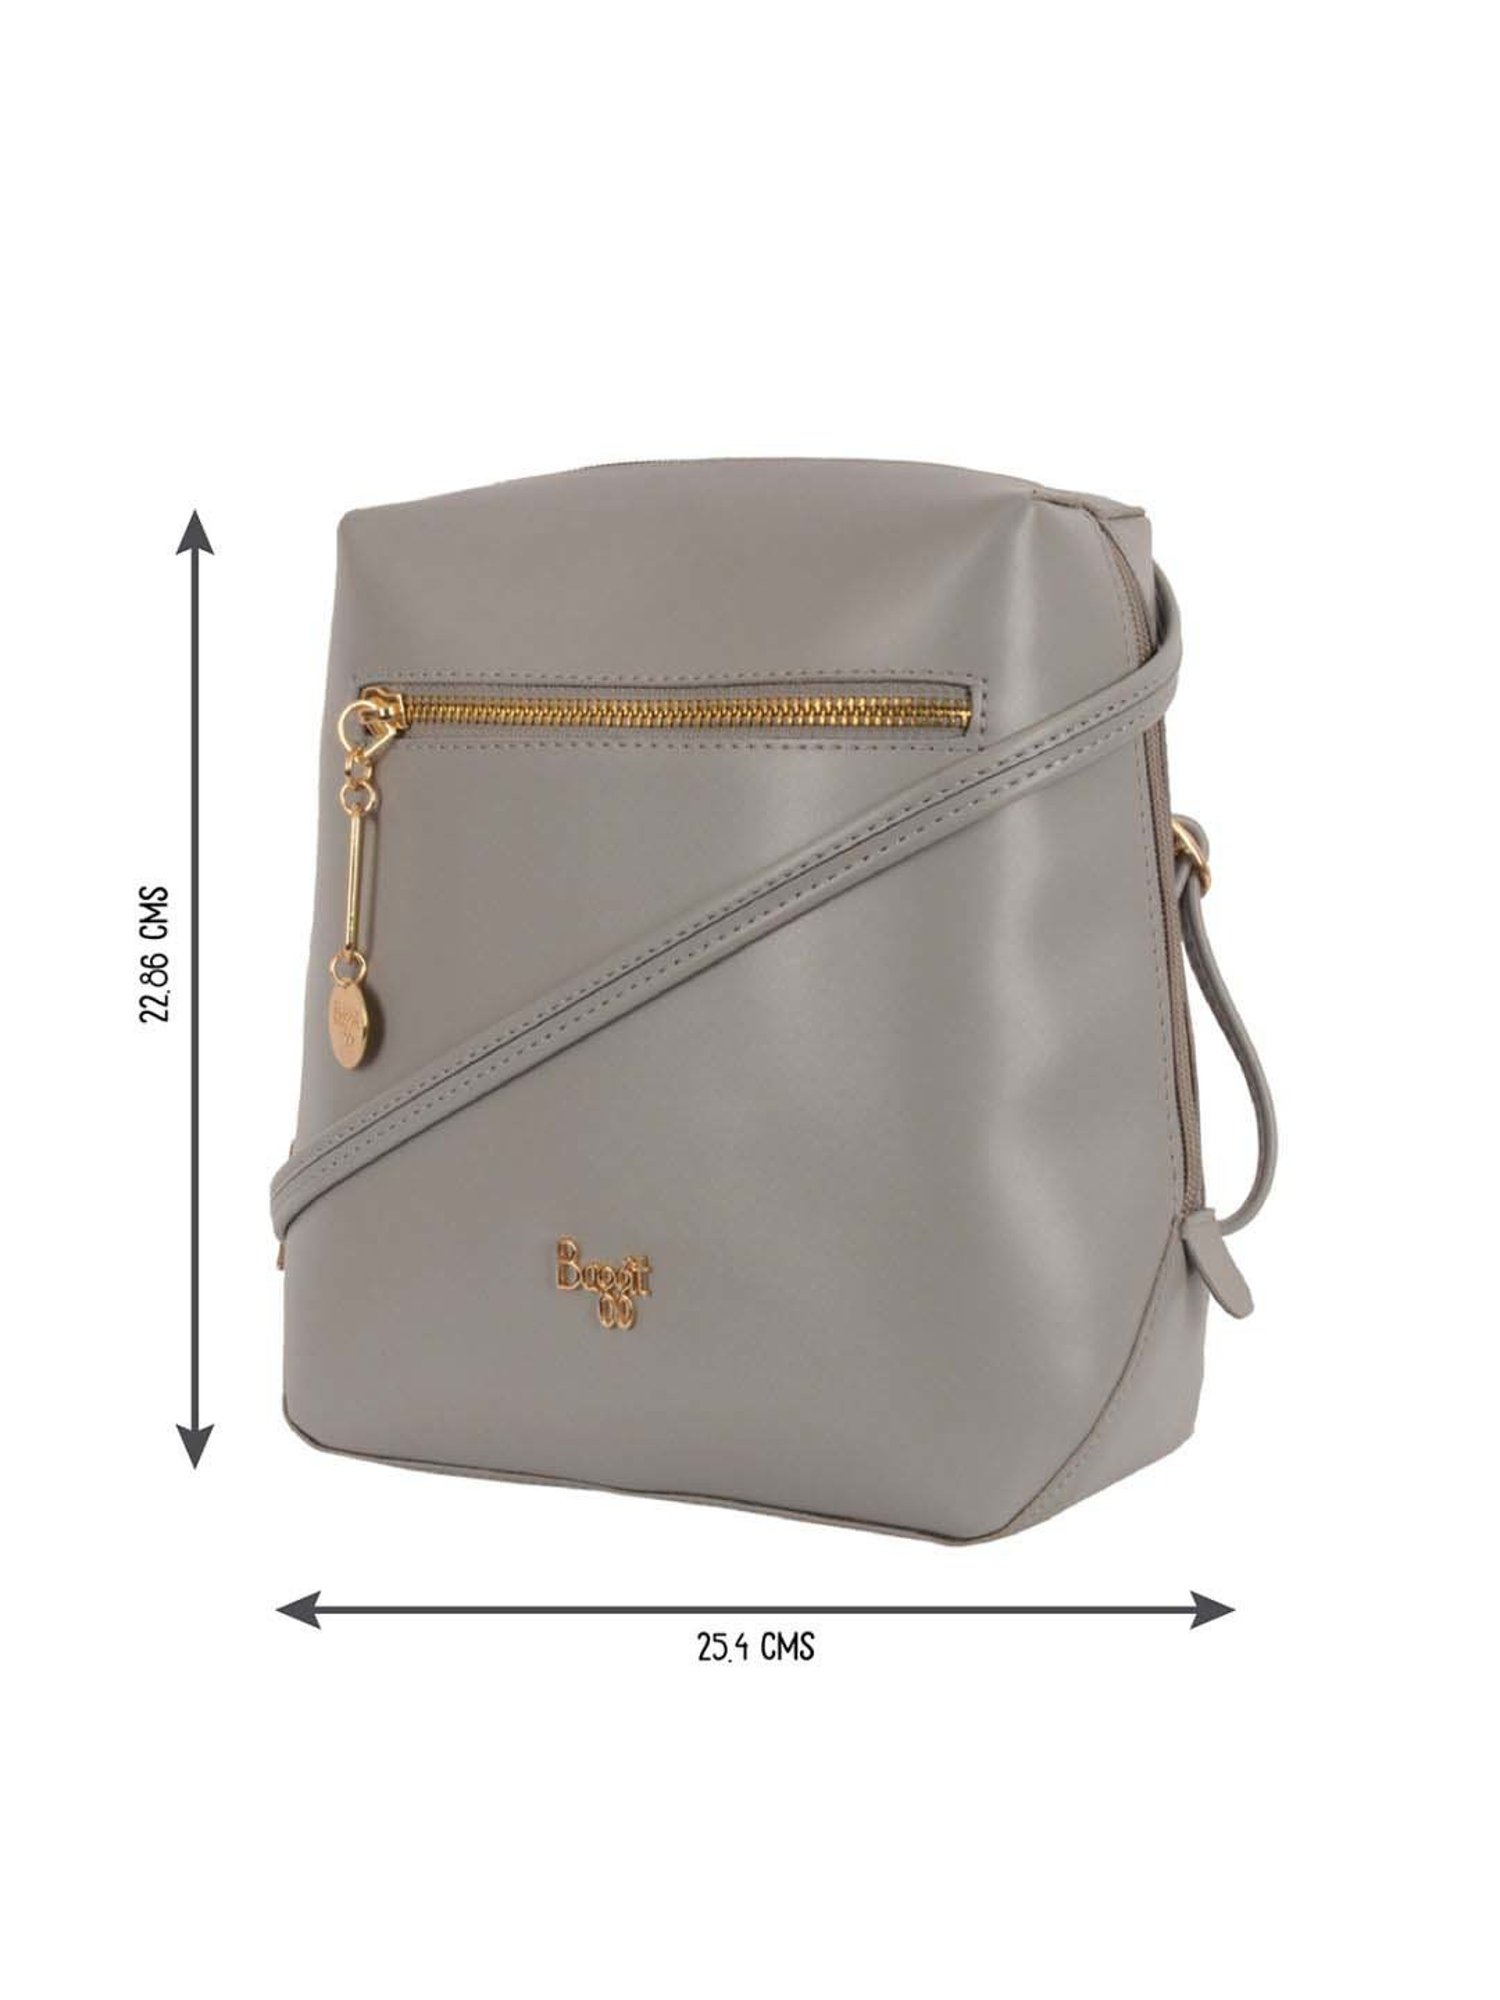 NEW Baggit Women's Tote Handbag (Black) Divided Inner Compartment Trendy  Look | eBay